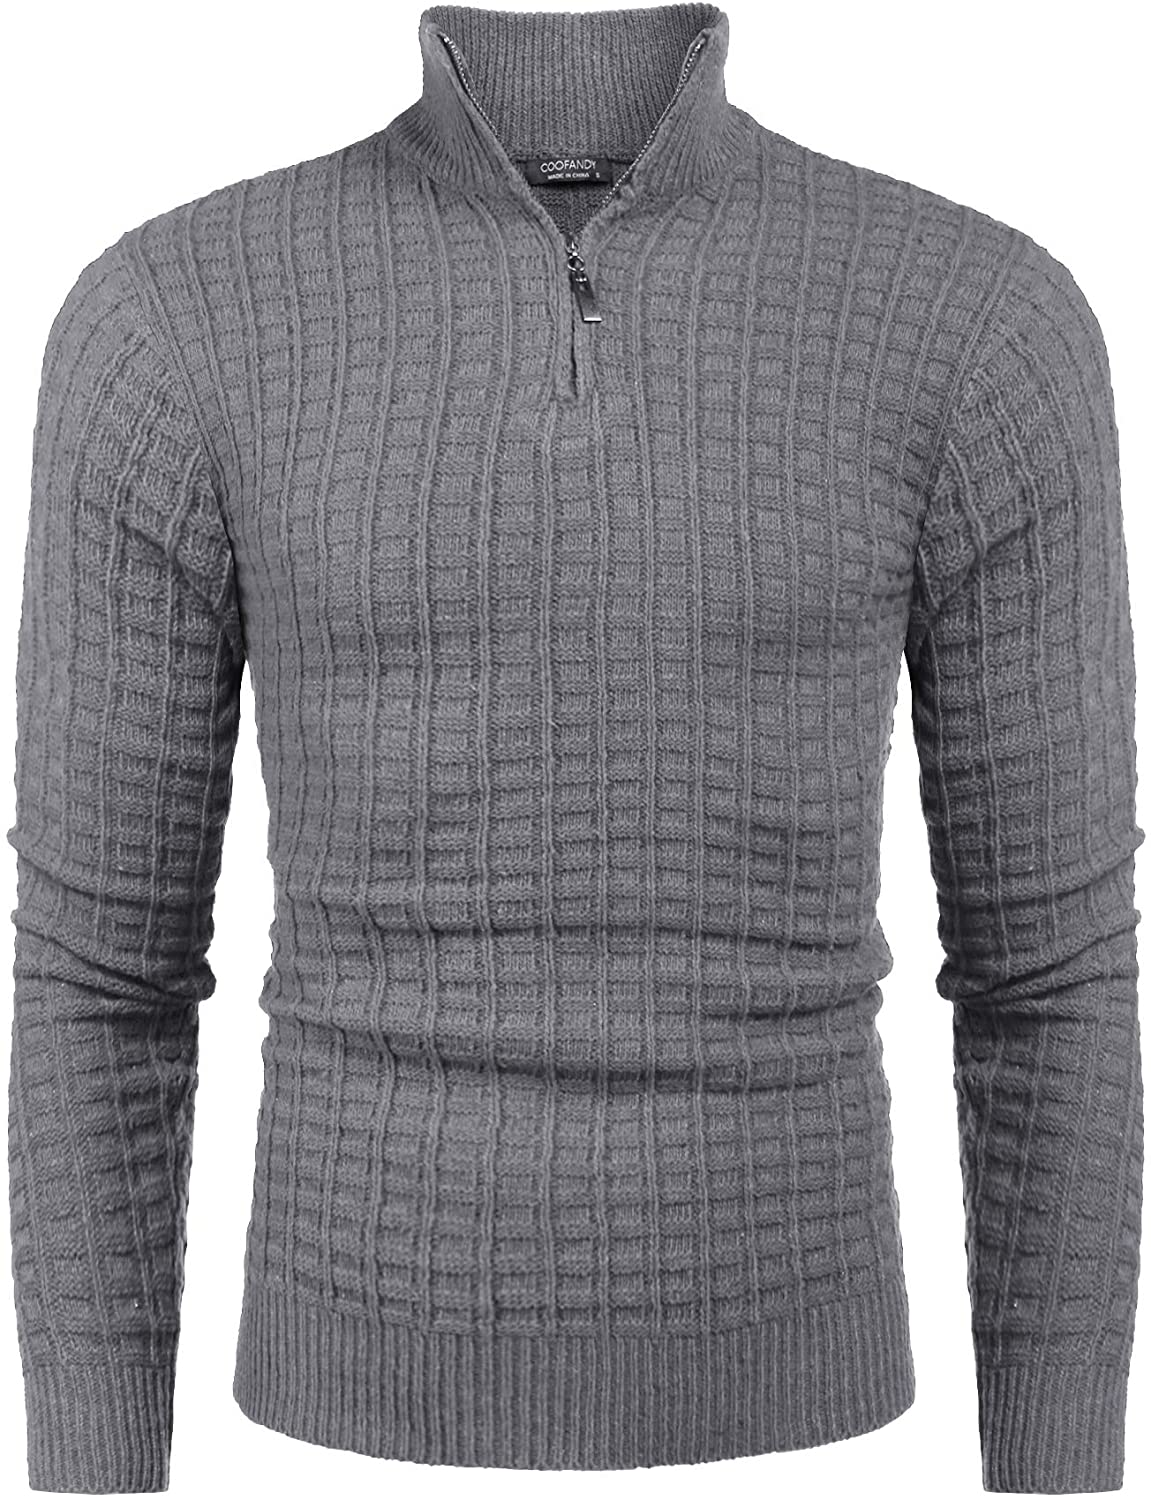 COOFANDY Men's Quarter Zip Sweaters Slim Fit Lightweight Cotton Knitted ...